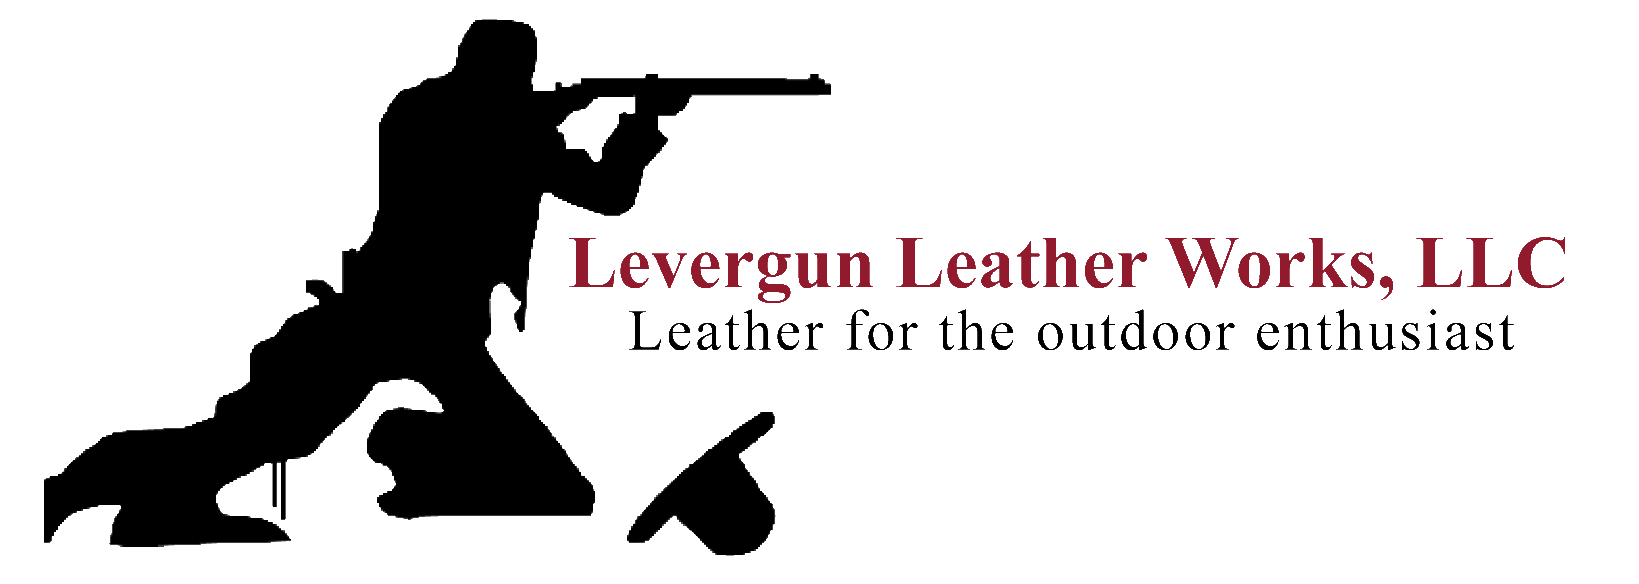 Levergun leather works client logo